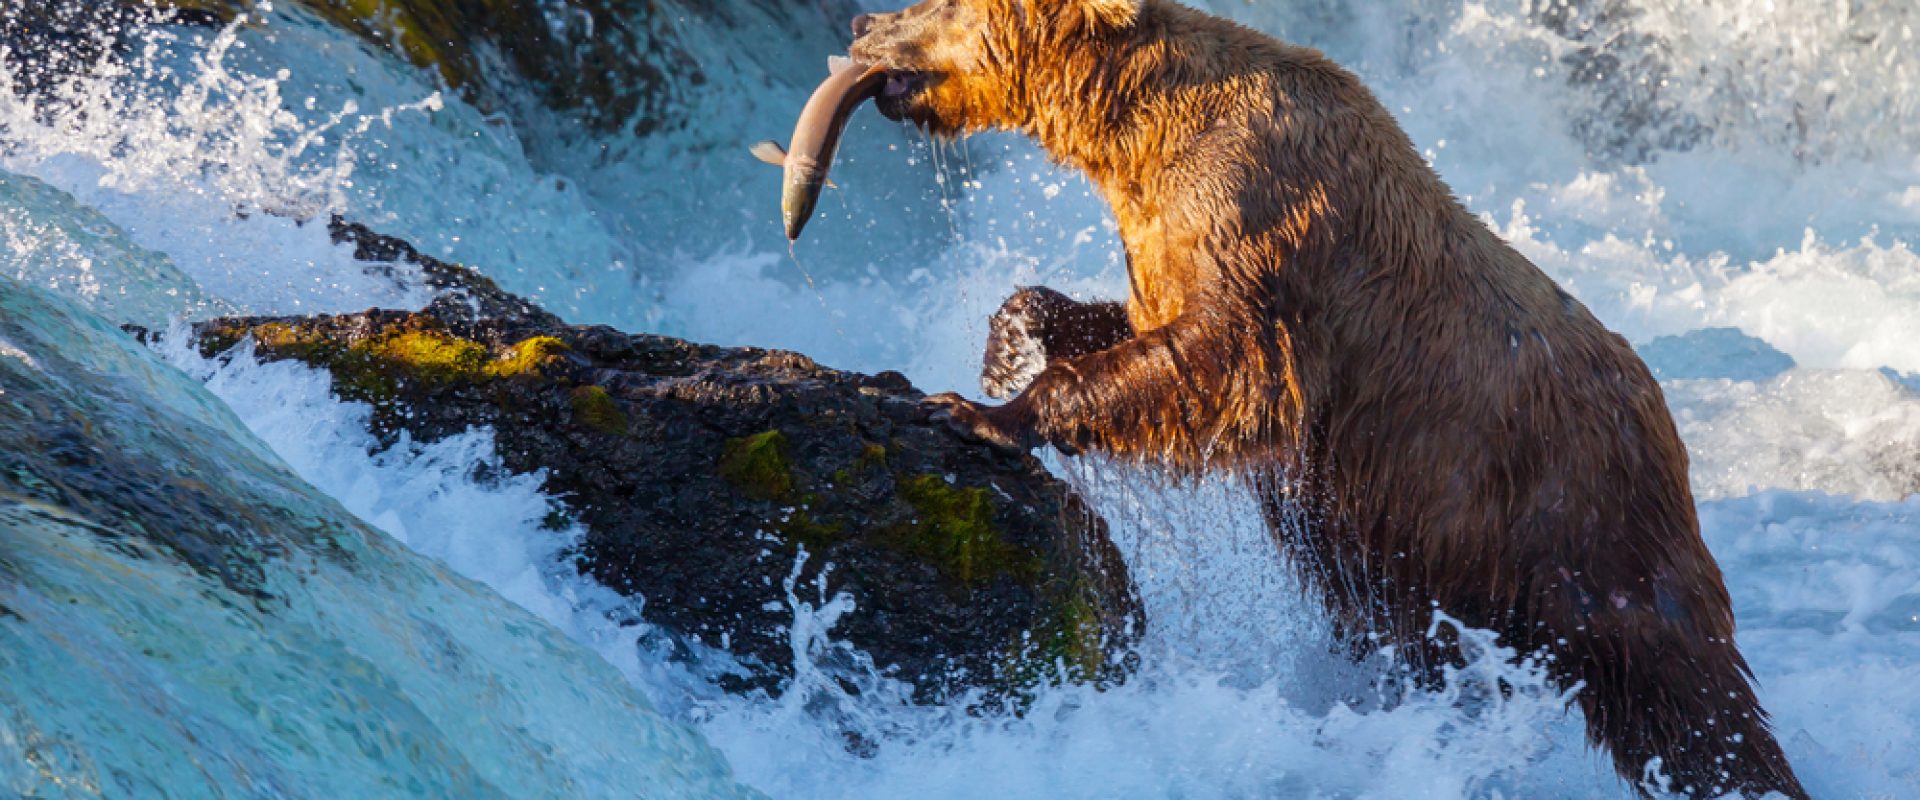 Bear catching salmon in a stream in Alaska